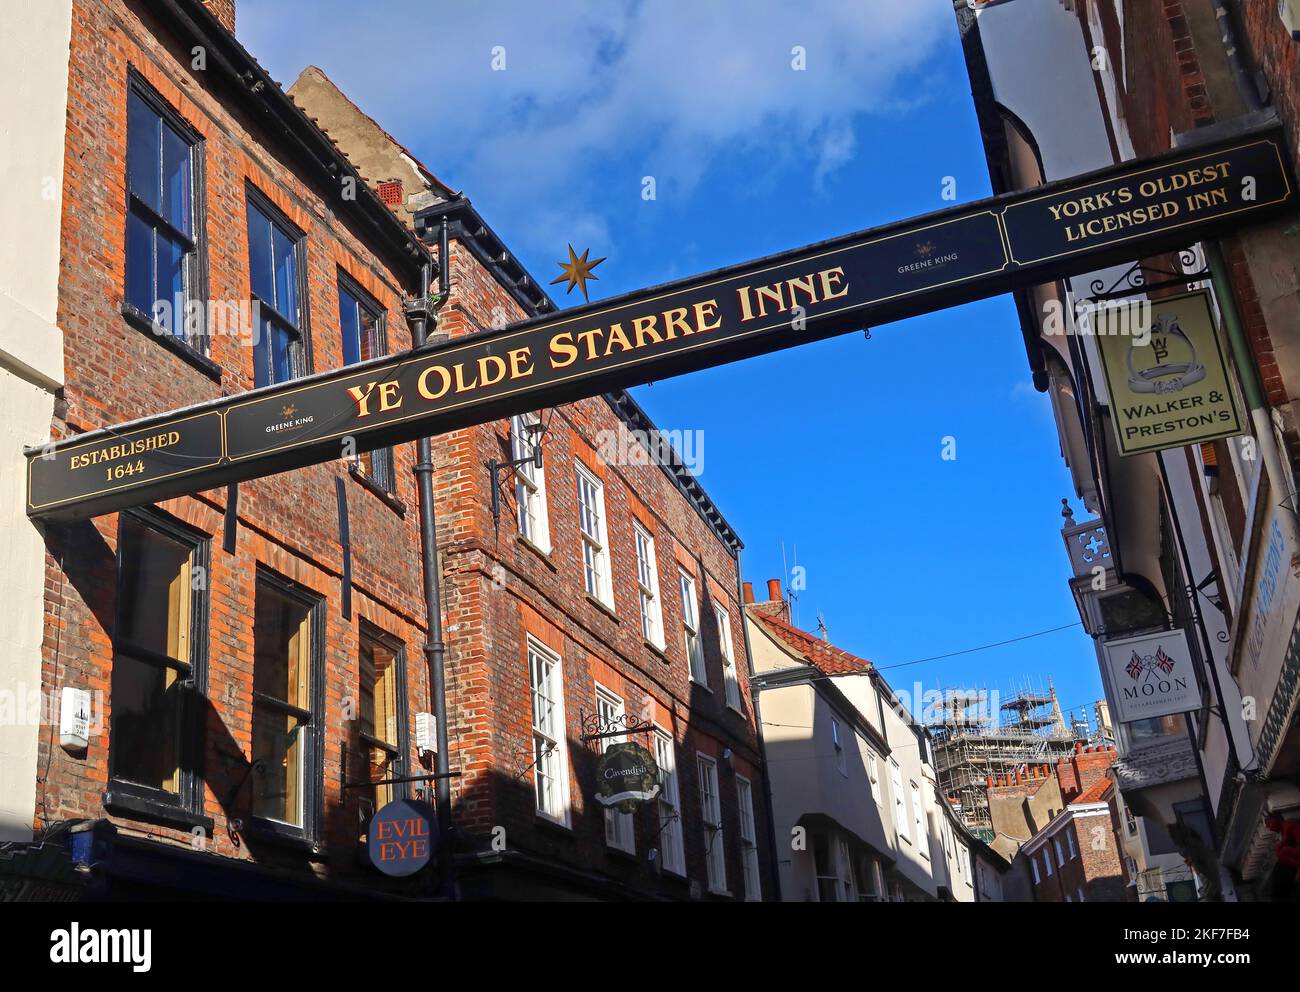 Ye Olde Starre Inne, 40 Stonegate, York, Yorkshire, England, UK, YO1 8AS Stock Photo